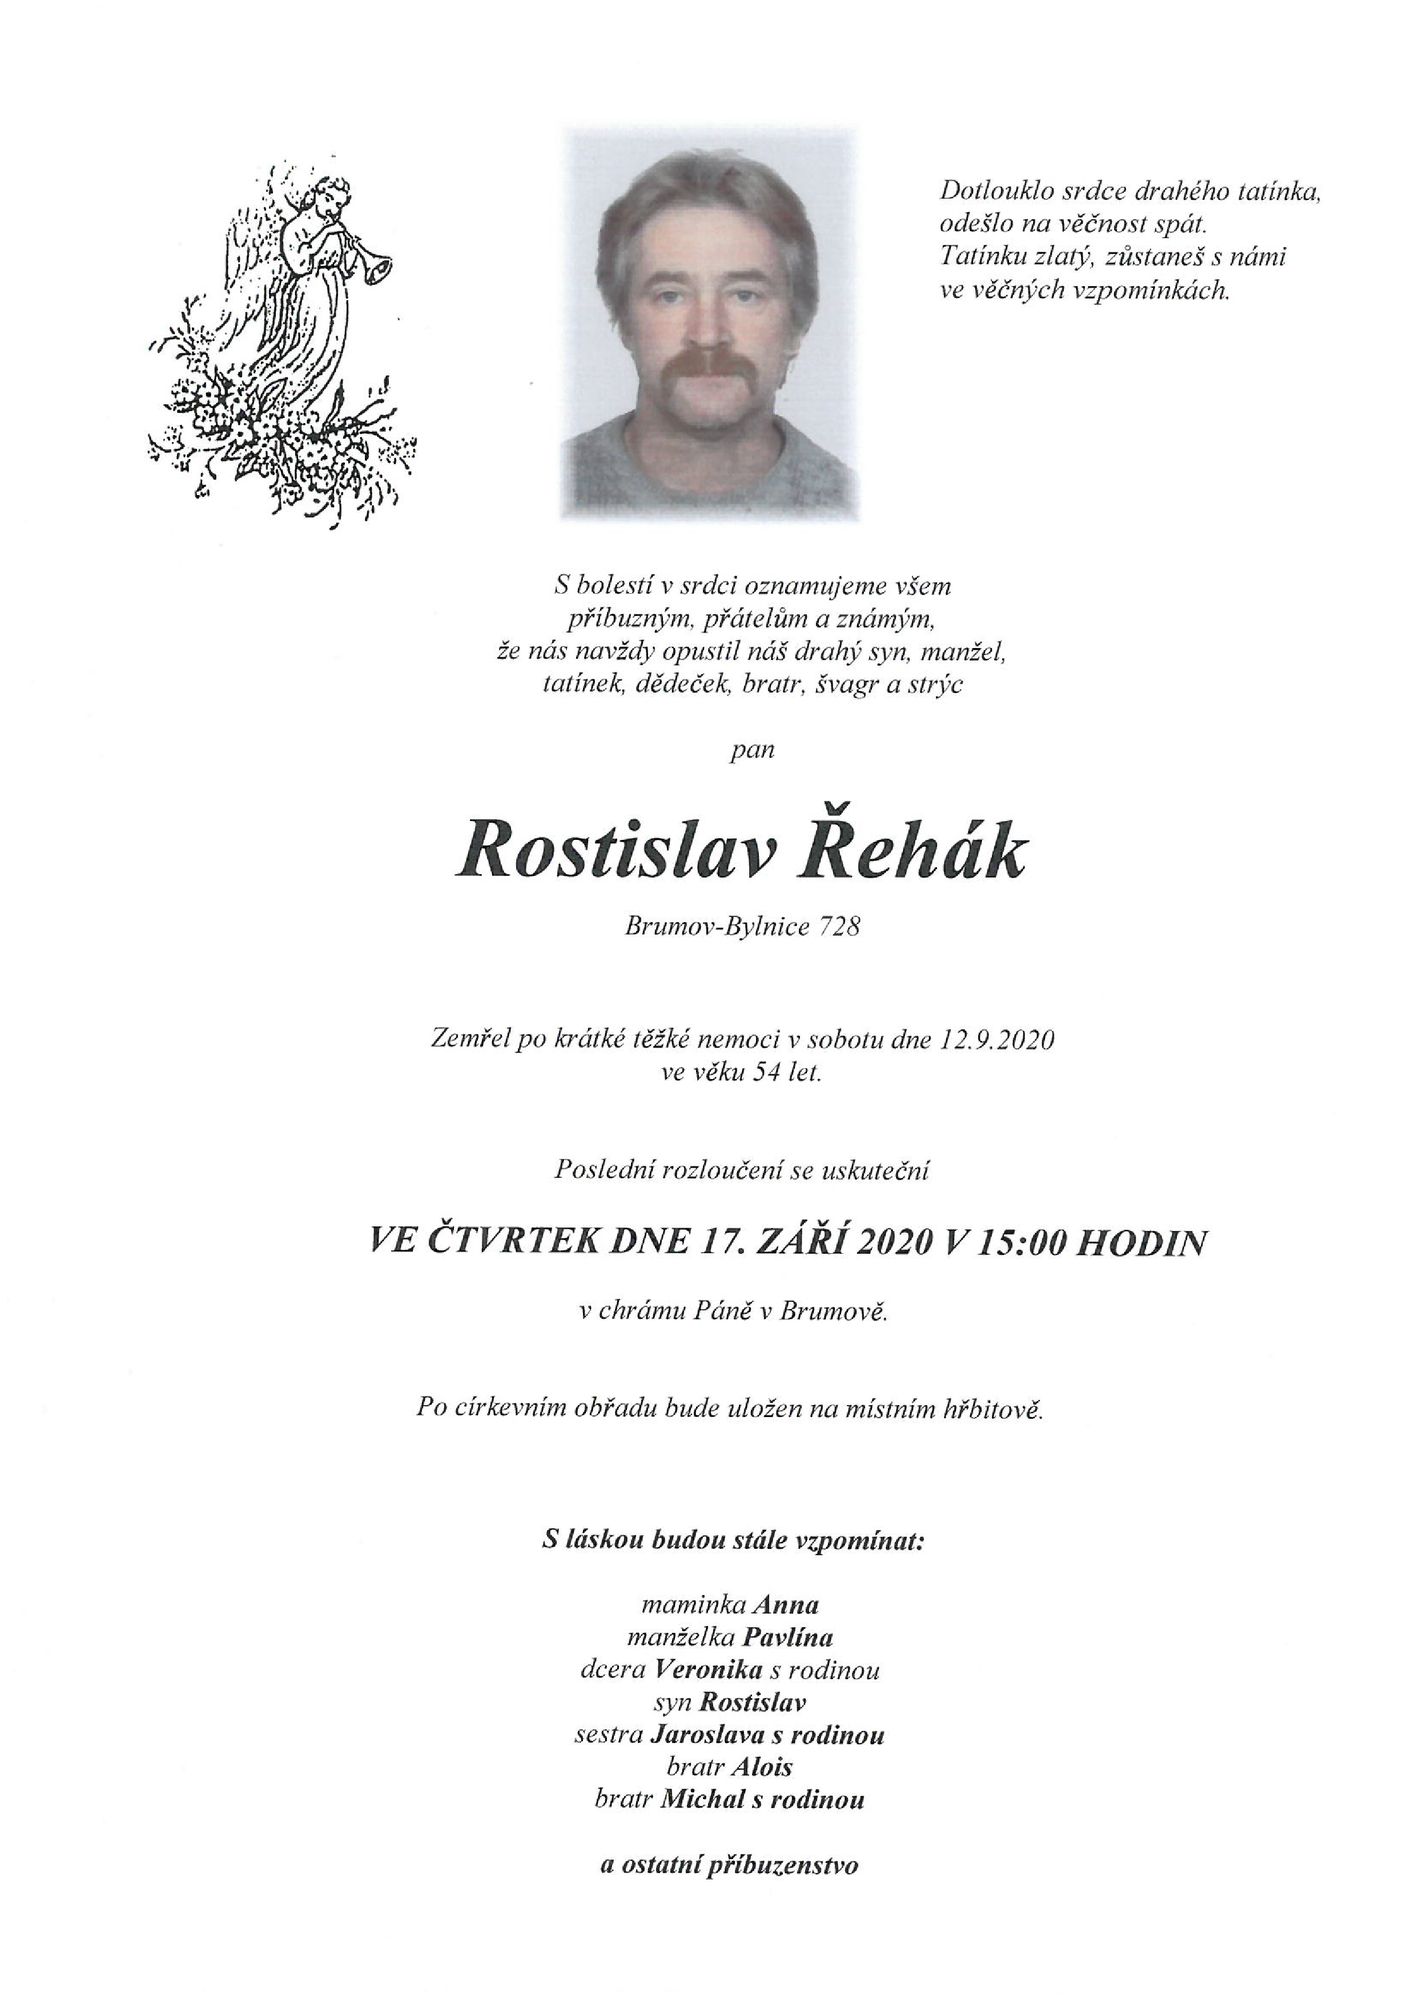 Rostislav Řehák